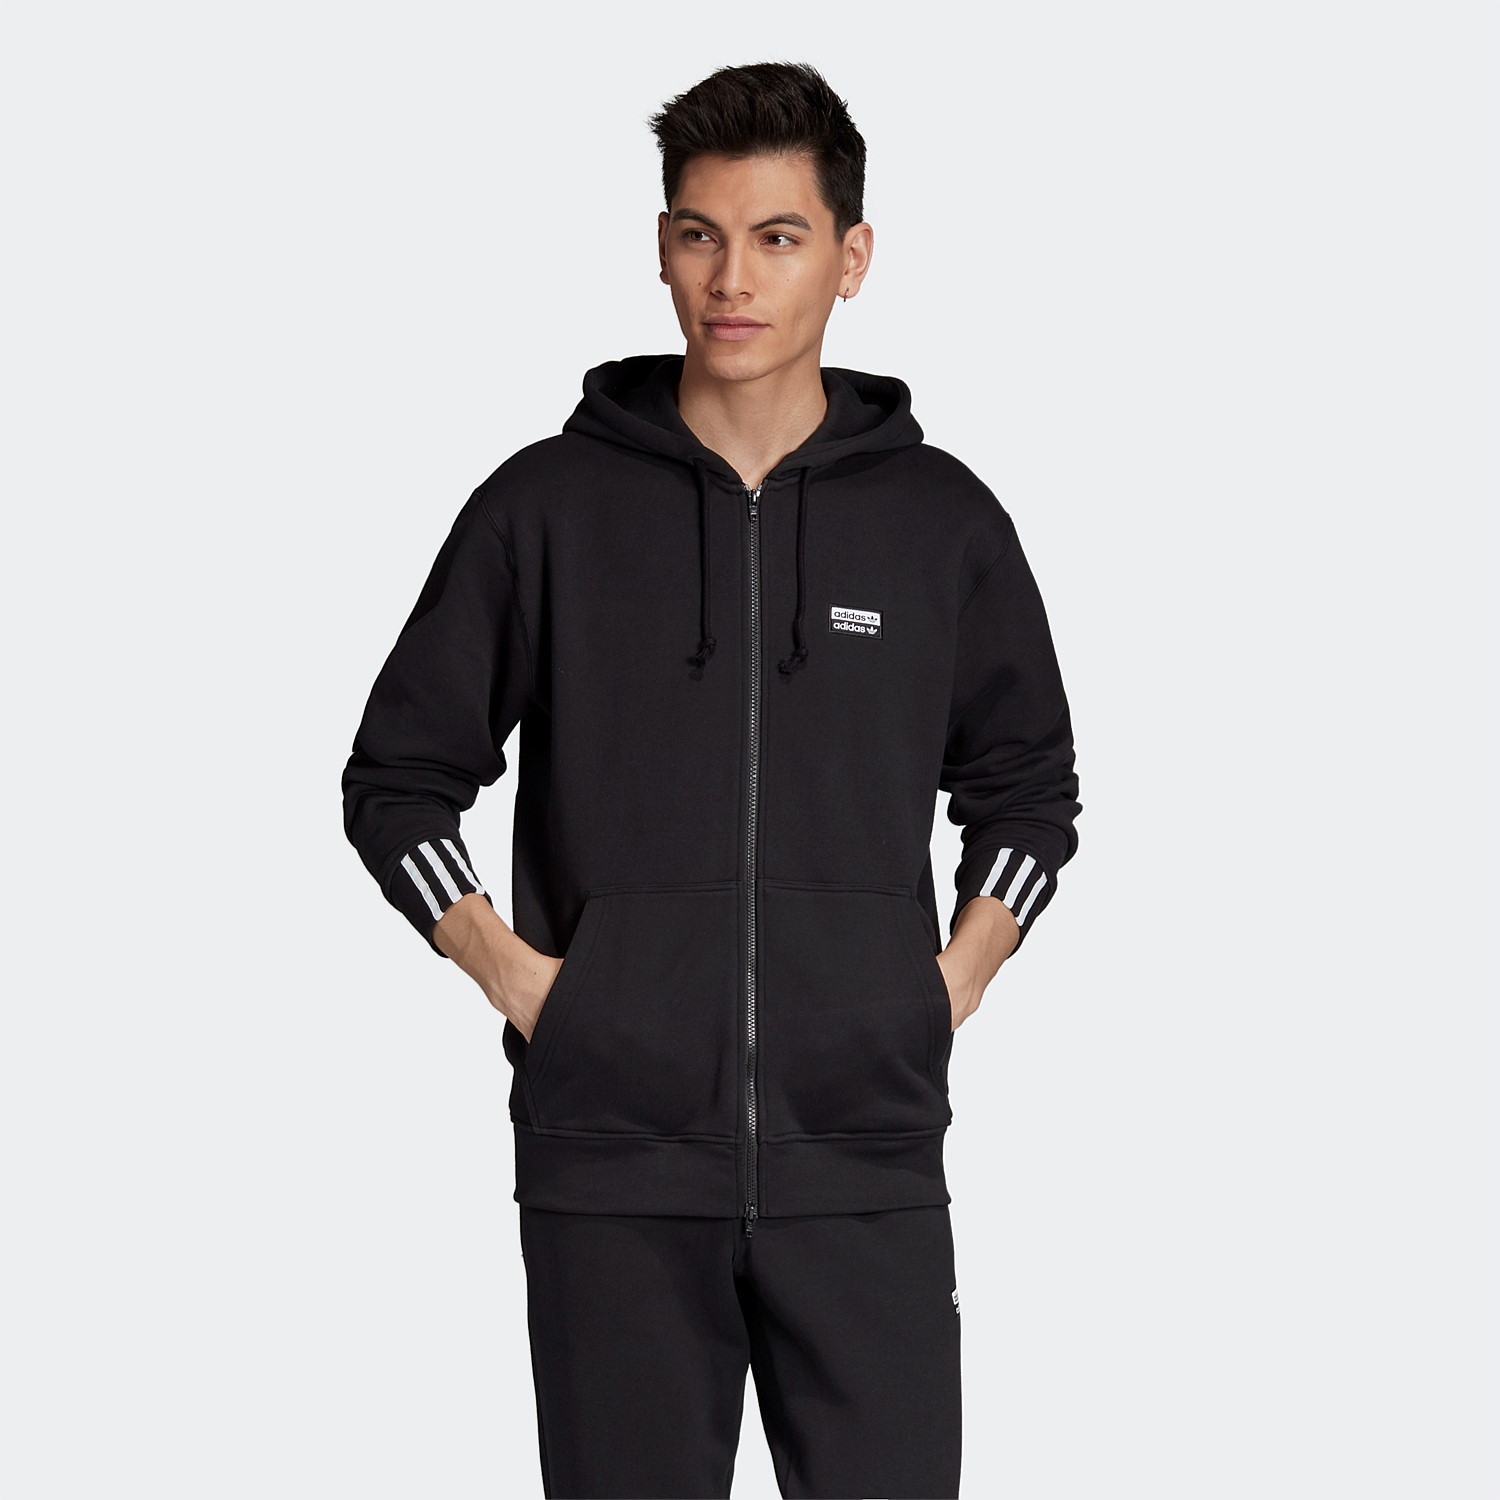 adidas zip hoodie women's sale